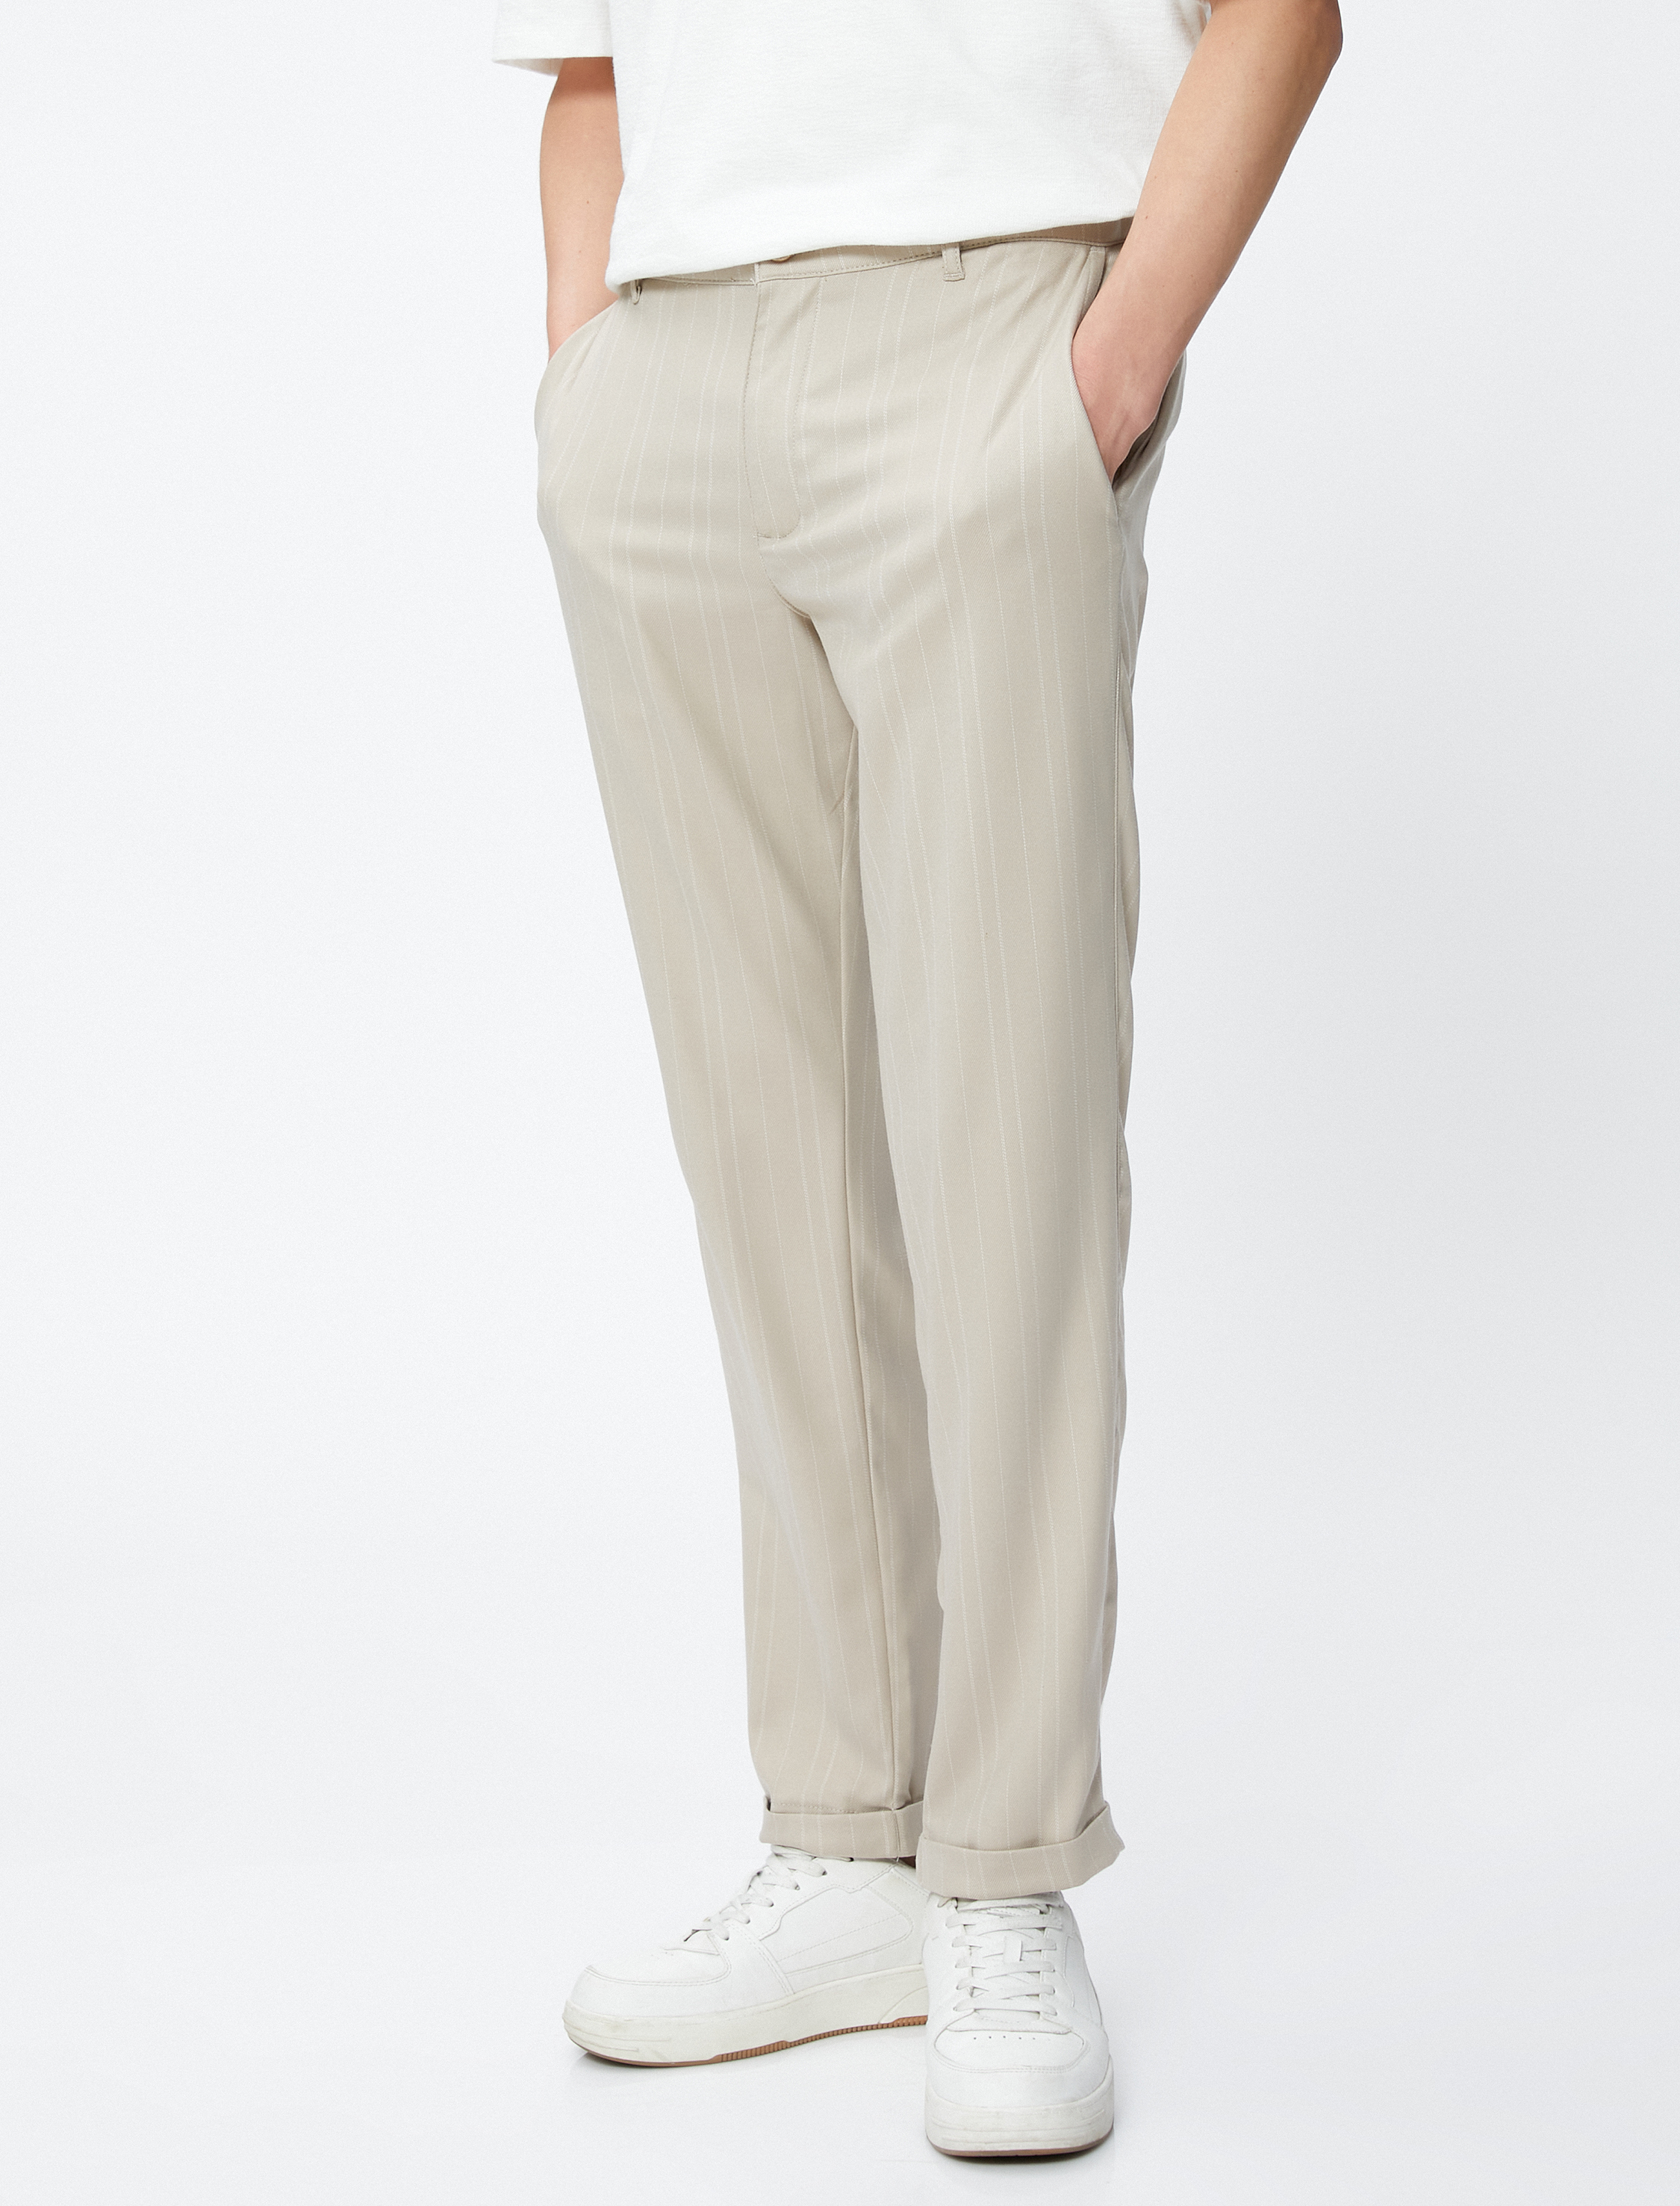 Koton Kumaş Pantolon Slim Fit Düğmeli Cep Detaylı Viskon Karışımlı. 3